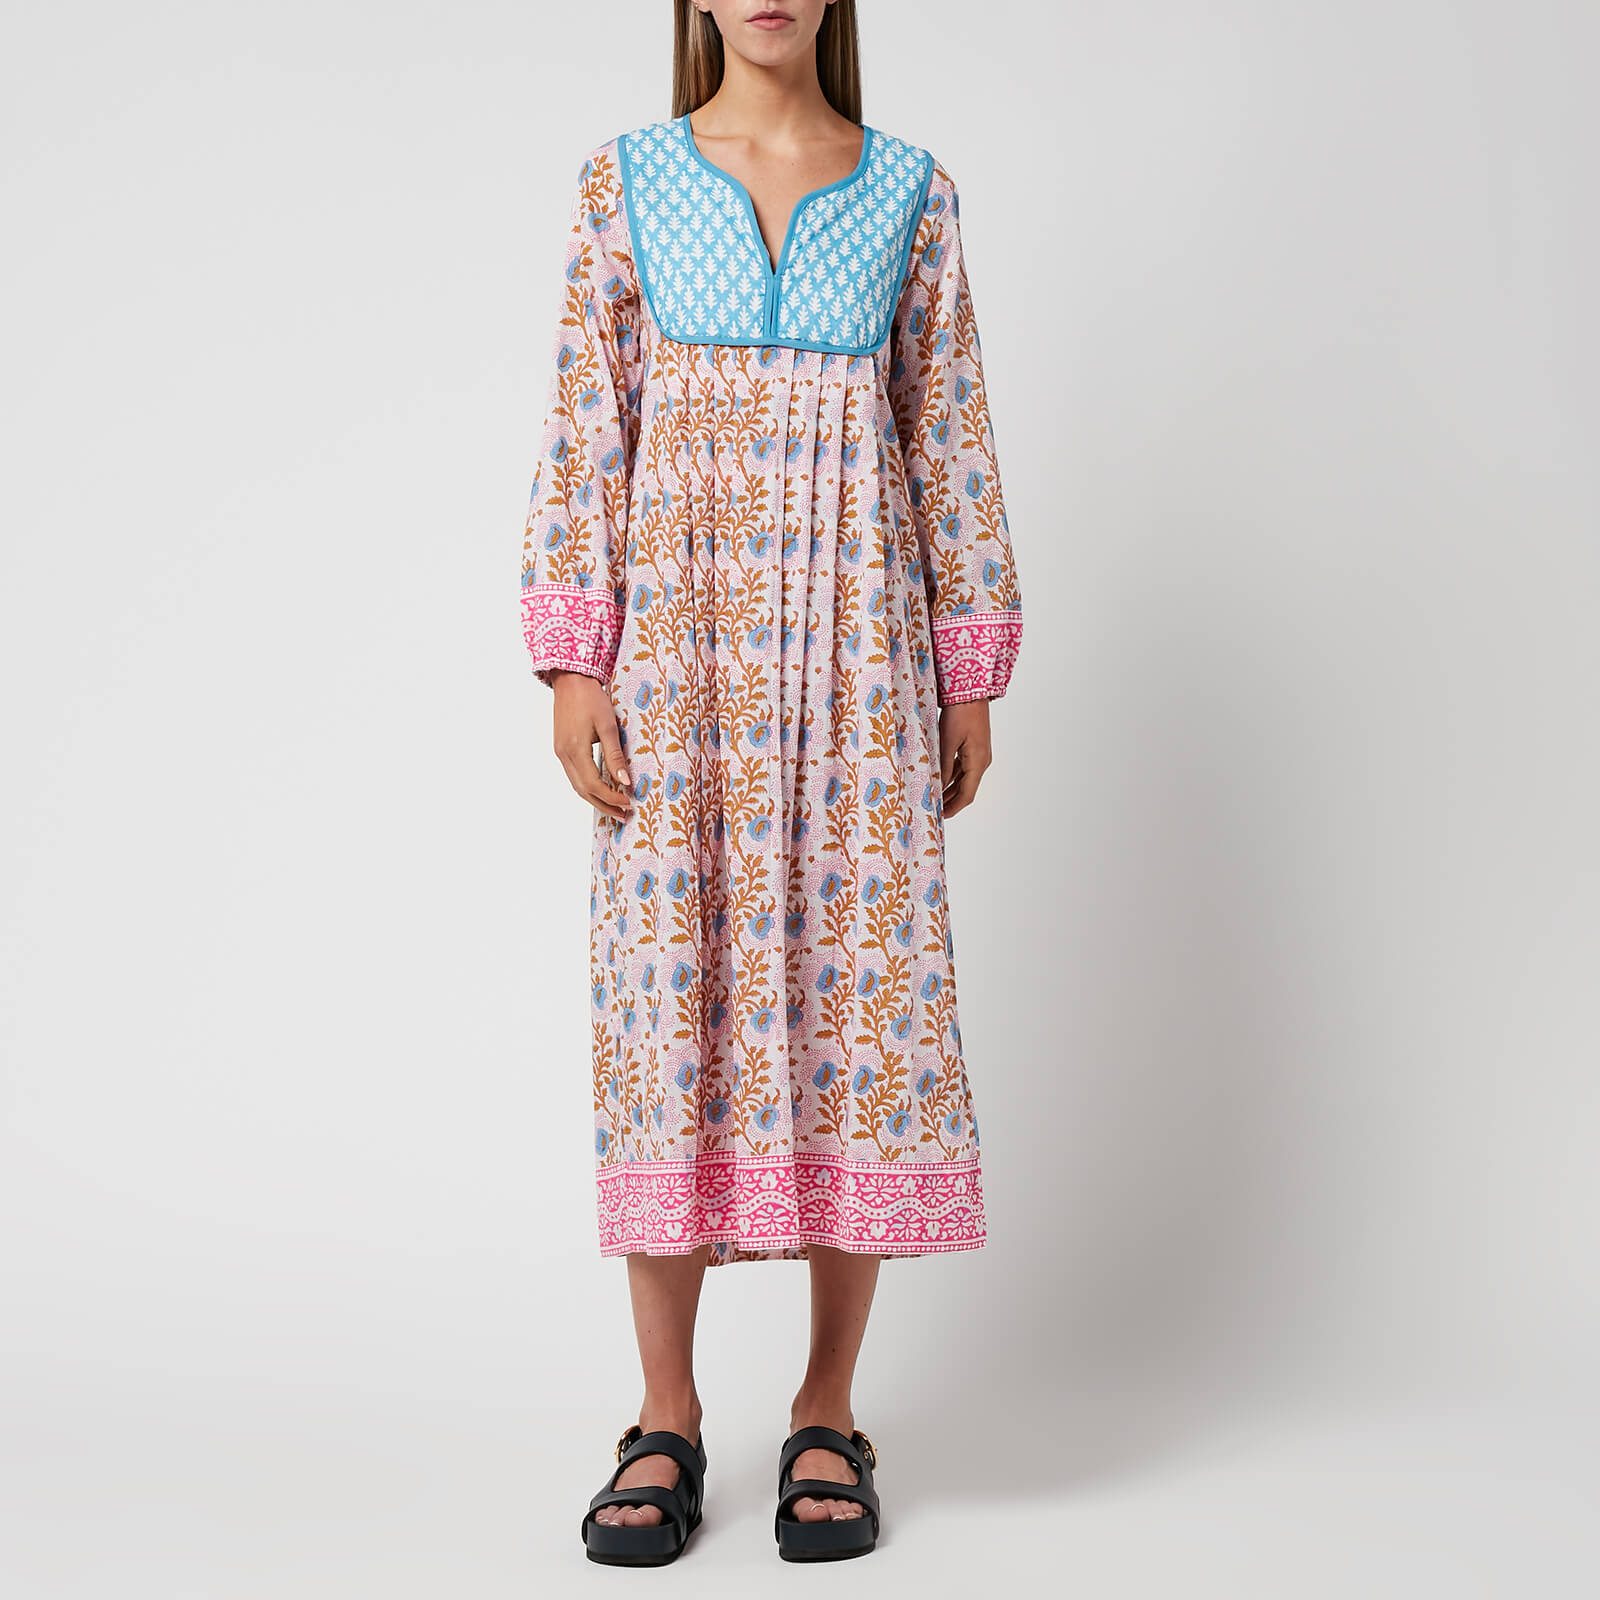 SZ Blockprints Women's Kitty Dress In Camel Essa Print - Camel & Hot Pink - M